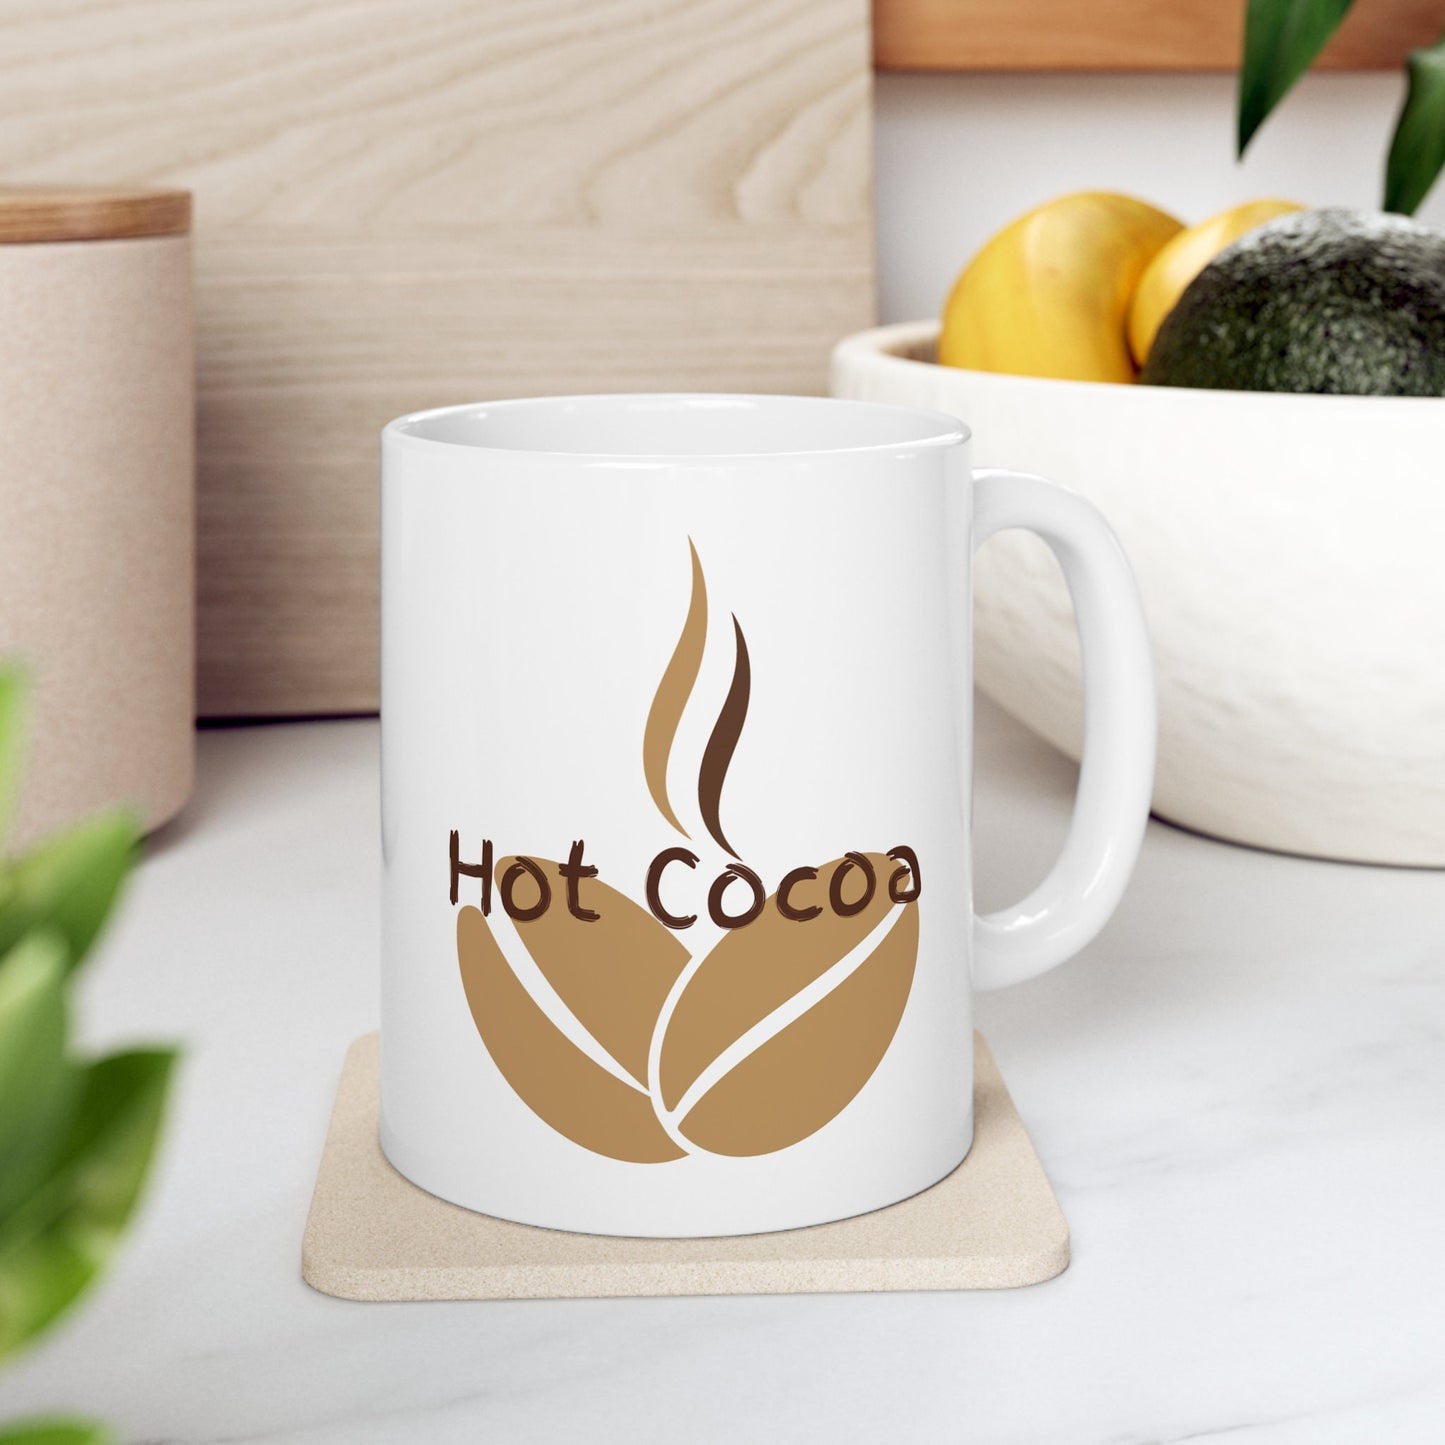 Hot Cocoa, Coffee Mug, Gift Mug, Holiday Mug, Cute Mug, White Mug, Ceramic Mug